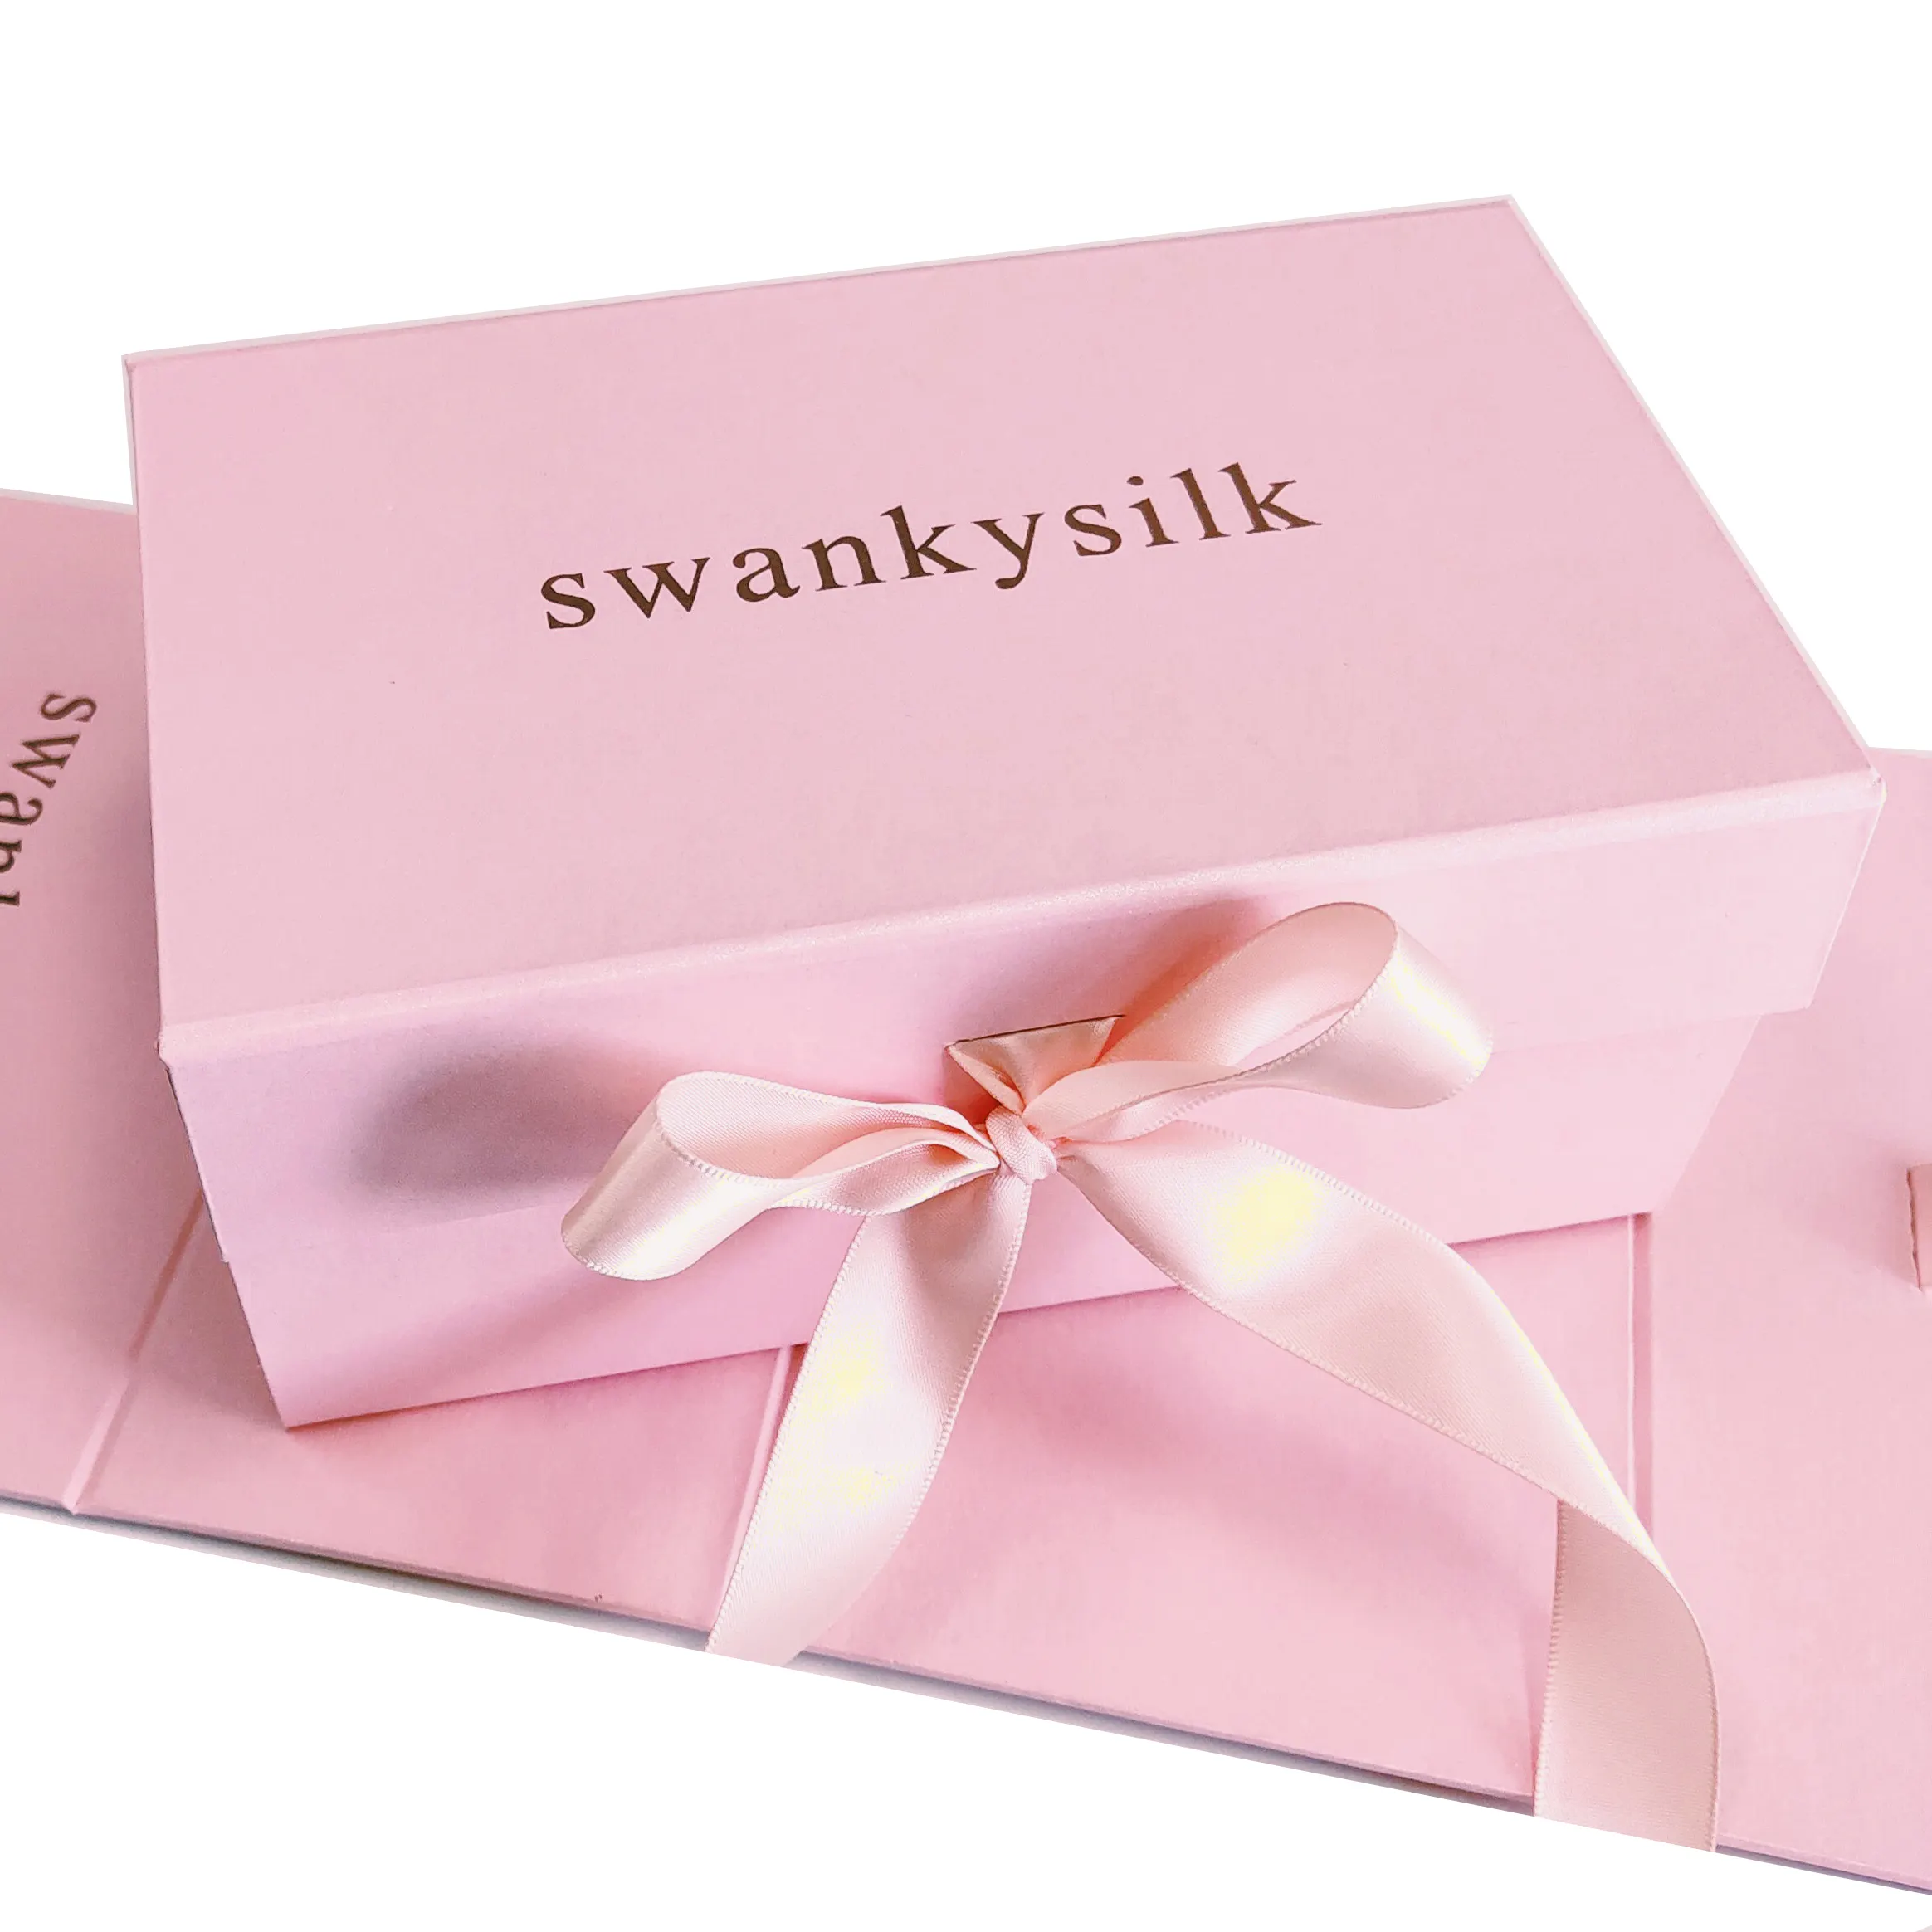 Make-up Clothes & Accessories Pink ribbon logo pink foldable gift box